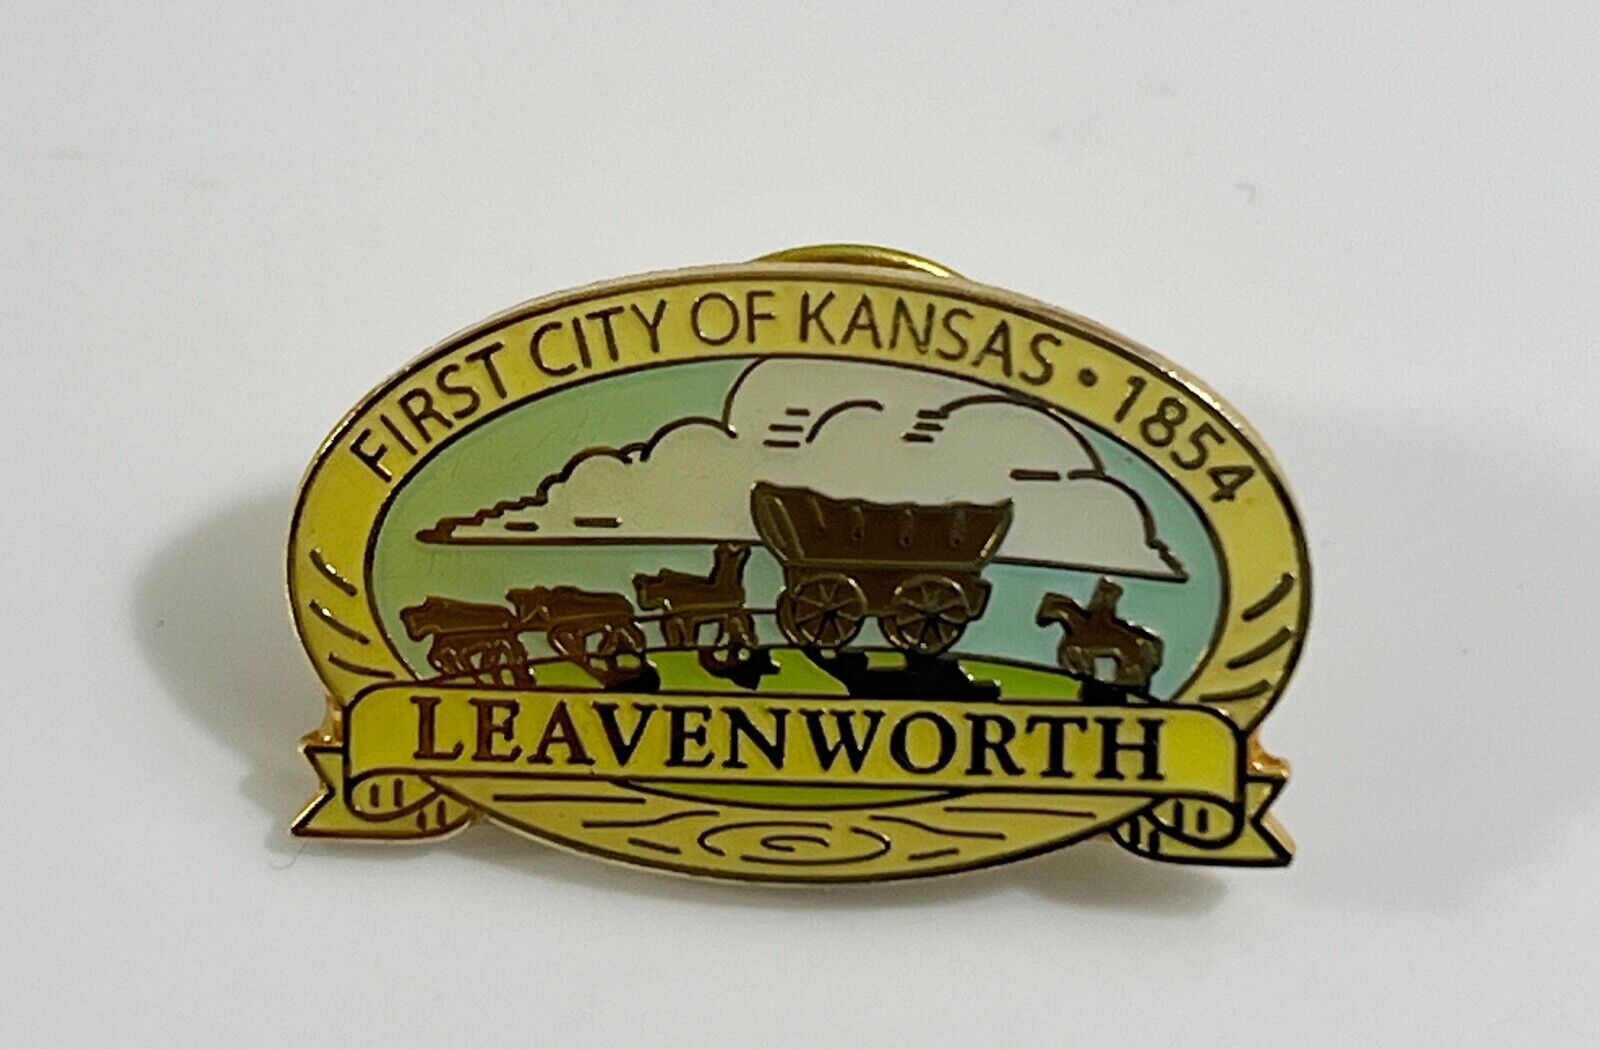 First City Of Kansas -1854 Leavenworth Lapel Pin